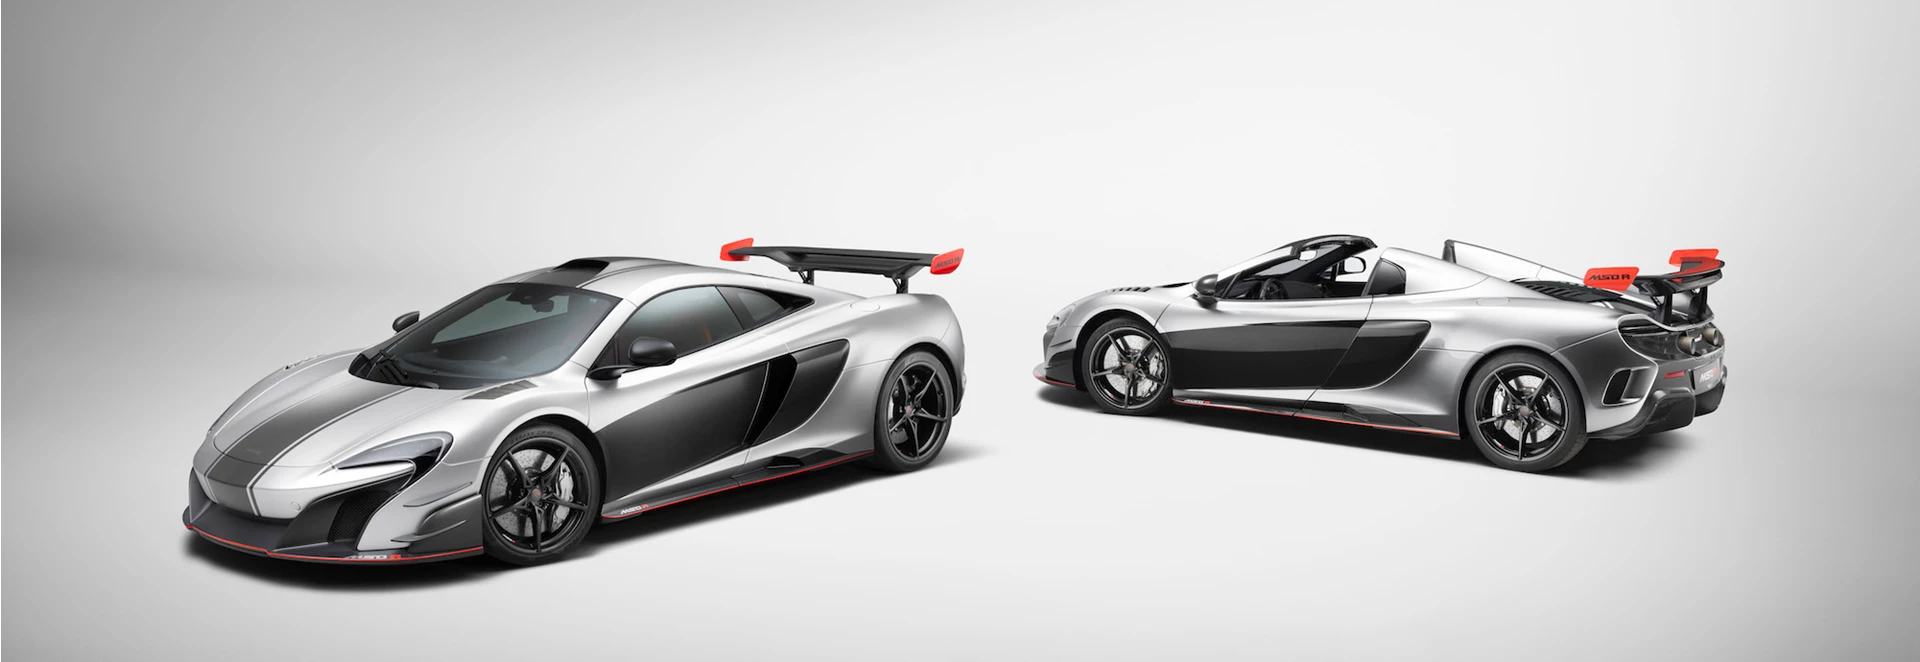 McLaren creates two unique models for customer 